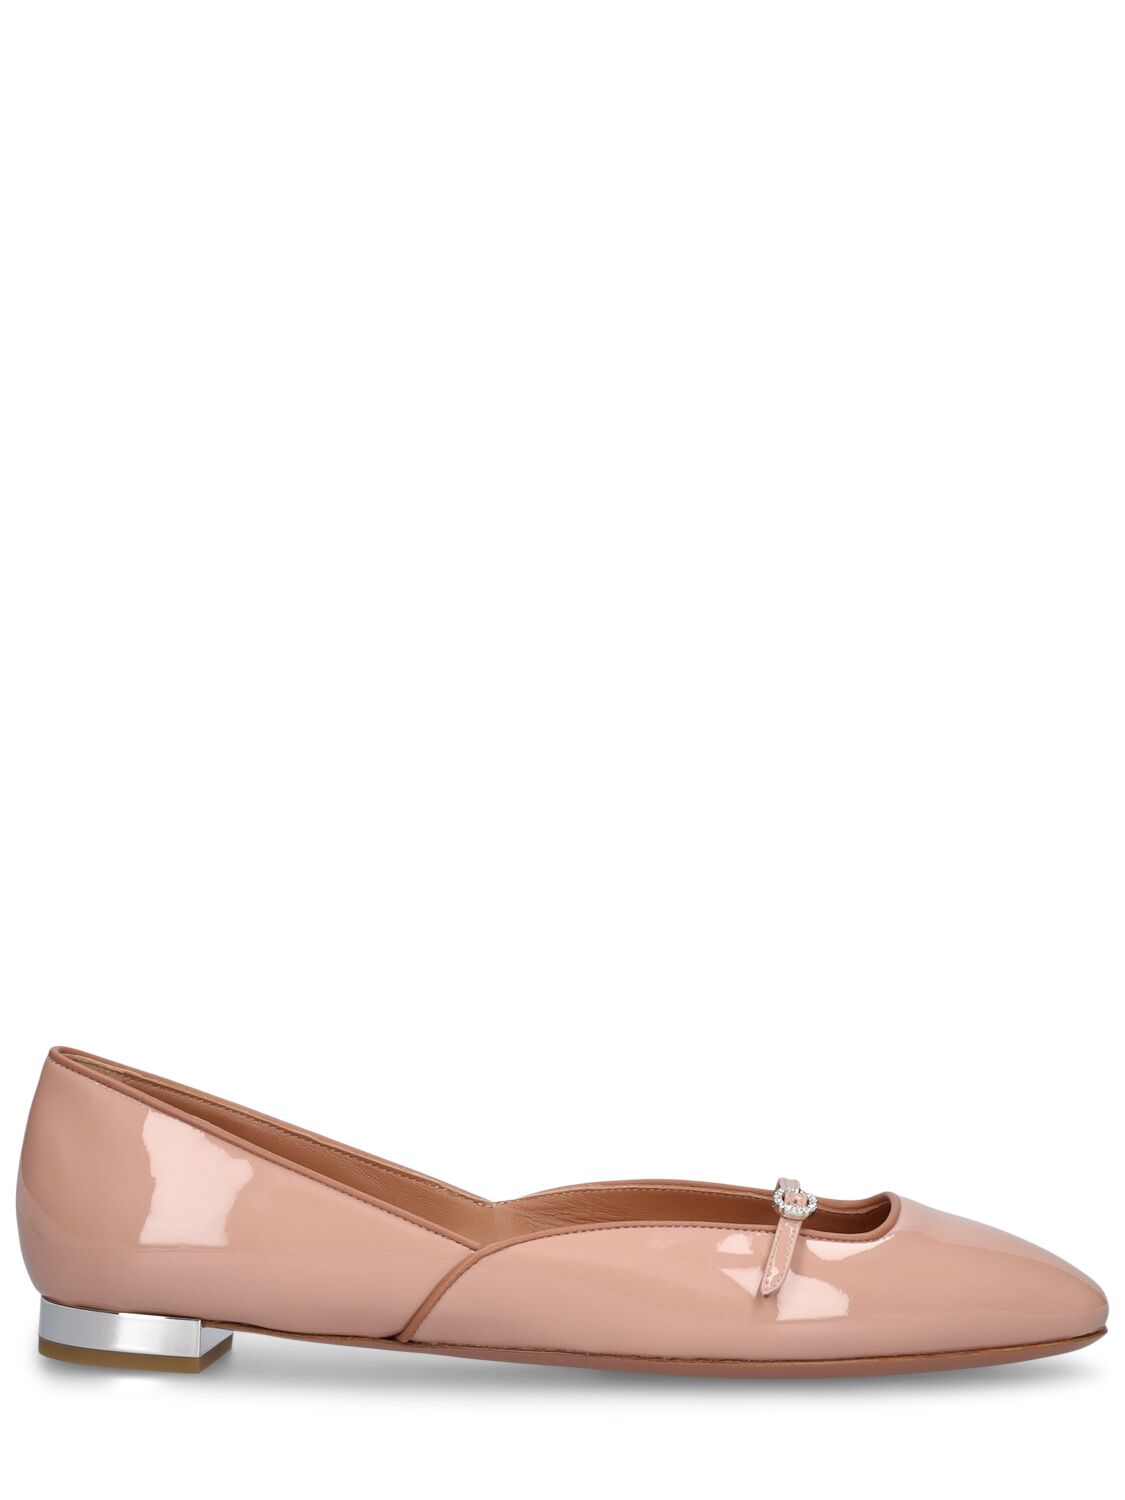 Aquazzura Secret Affair ballerina shoes - Brown